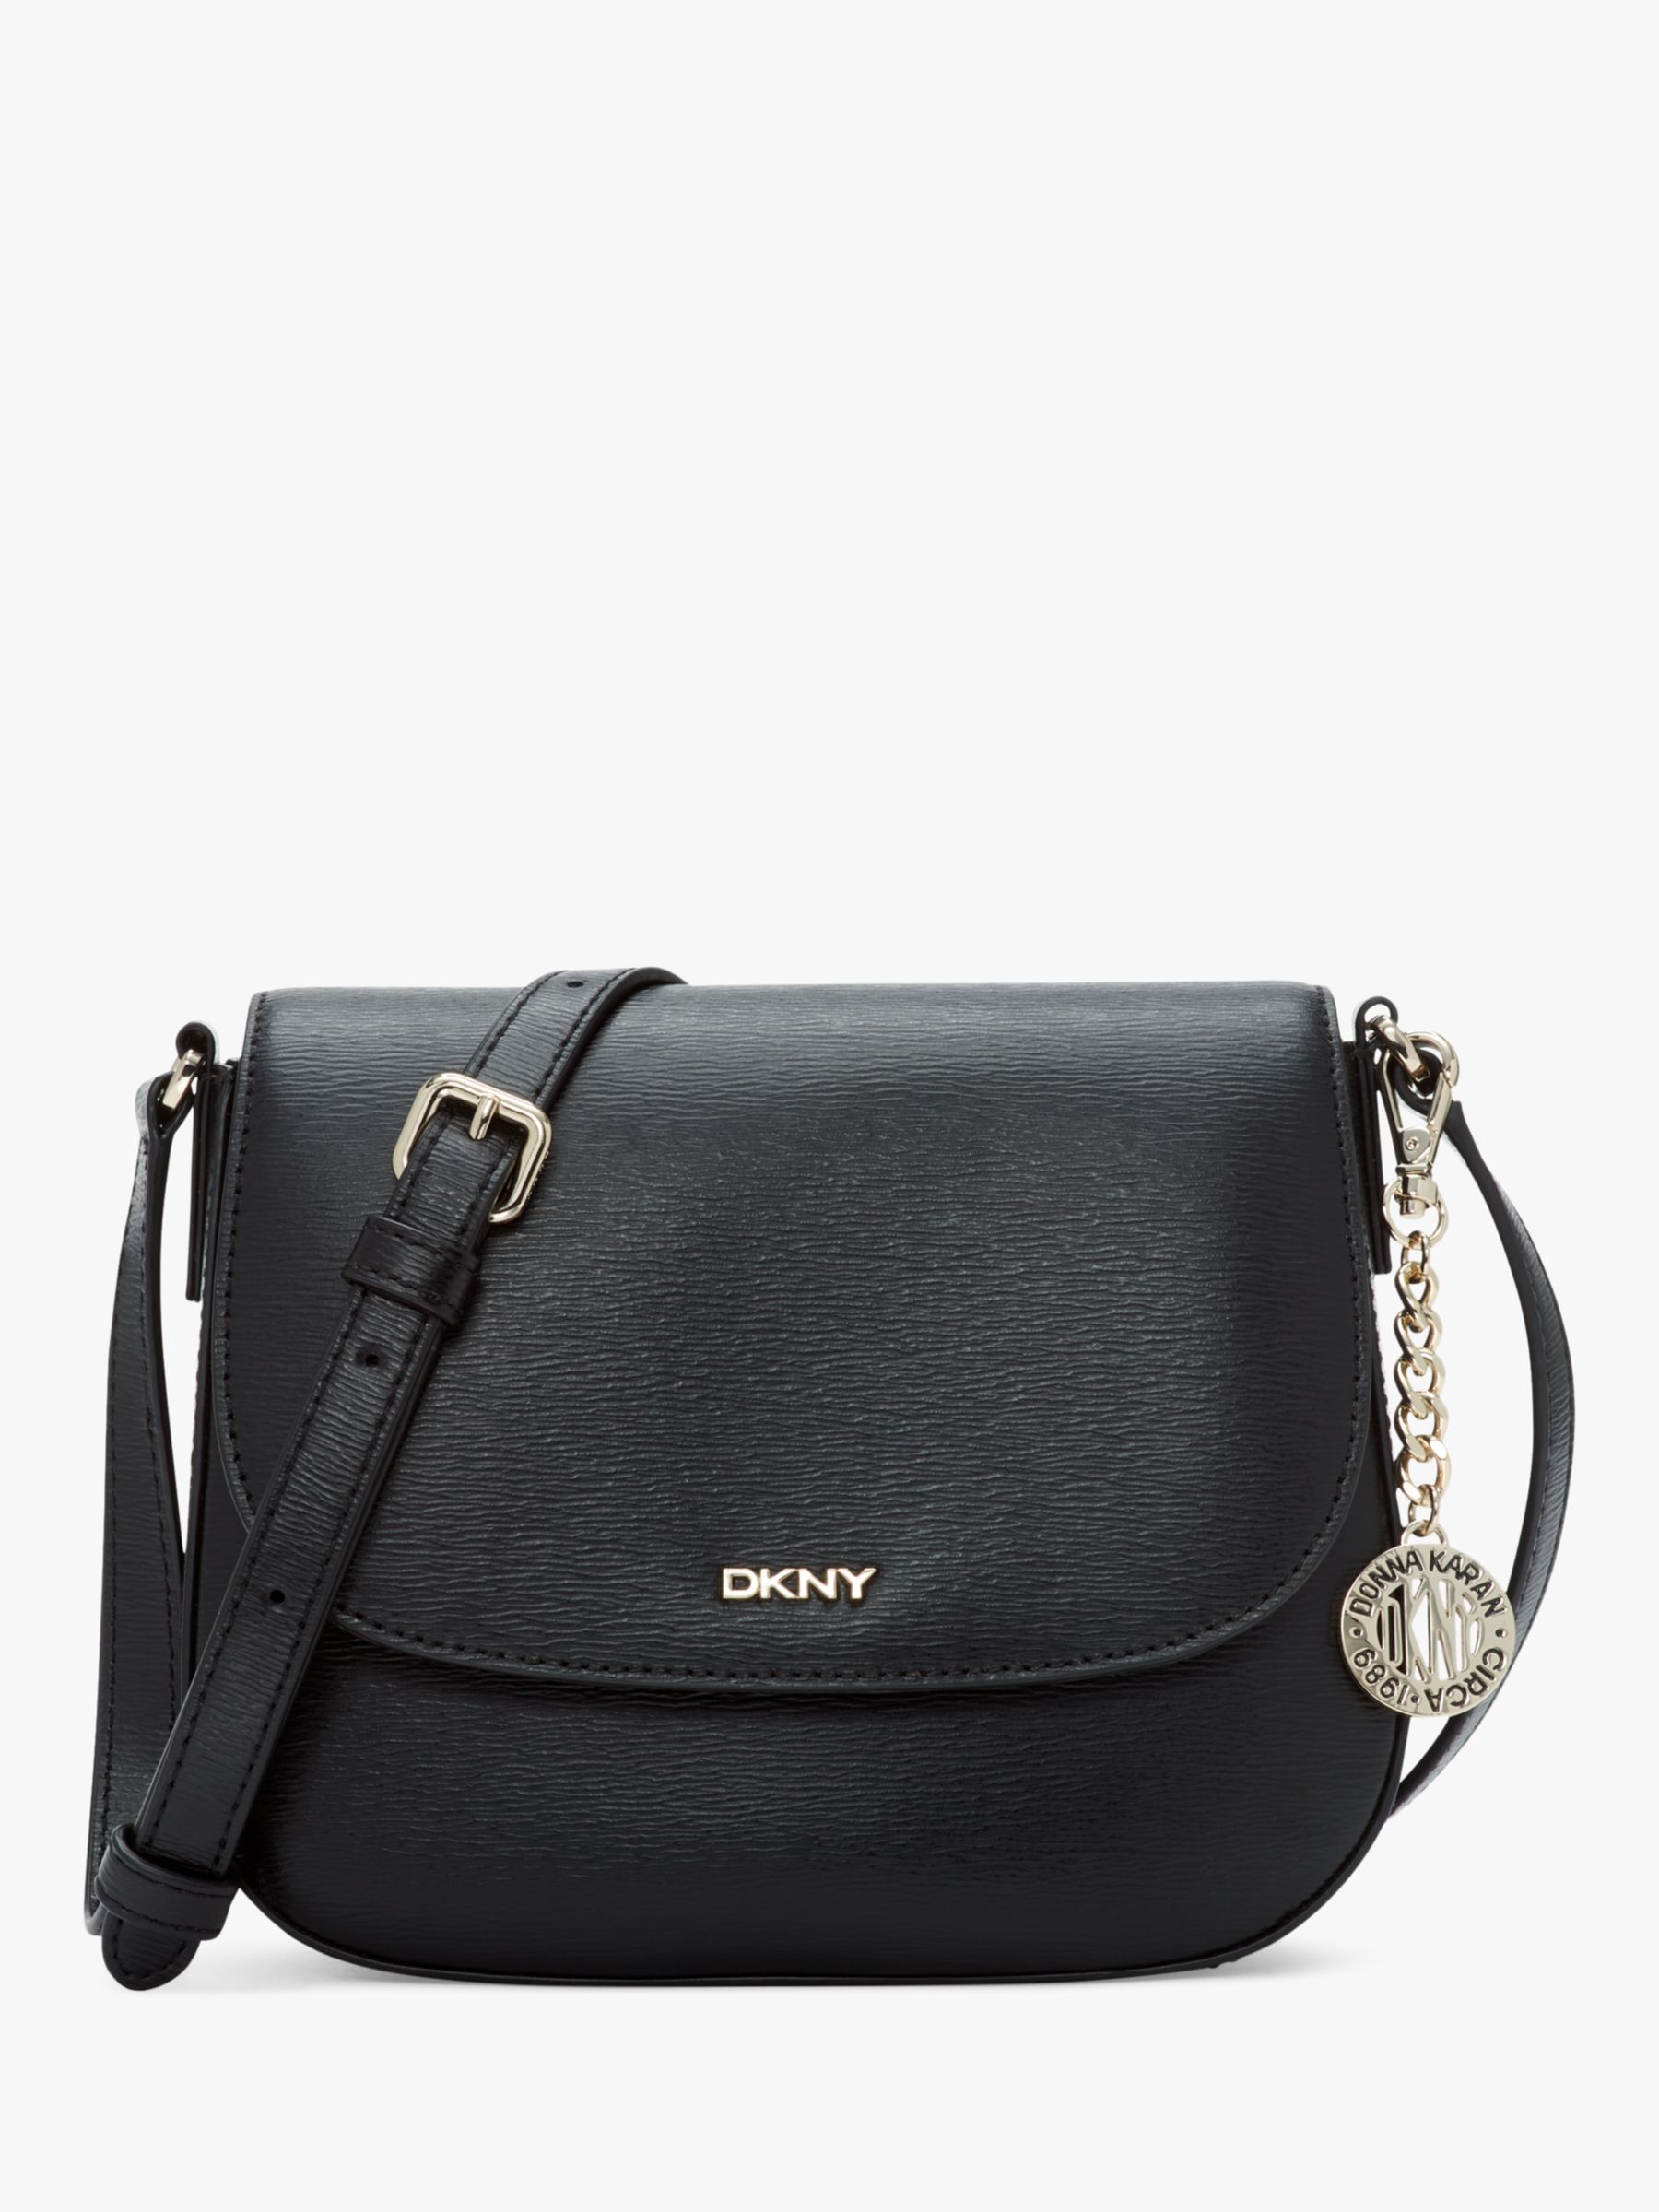 Dkny Women's Saddle Bag in Black